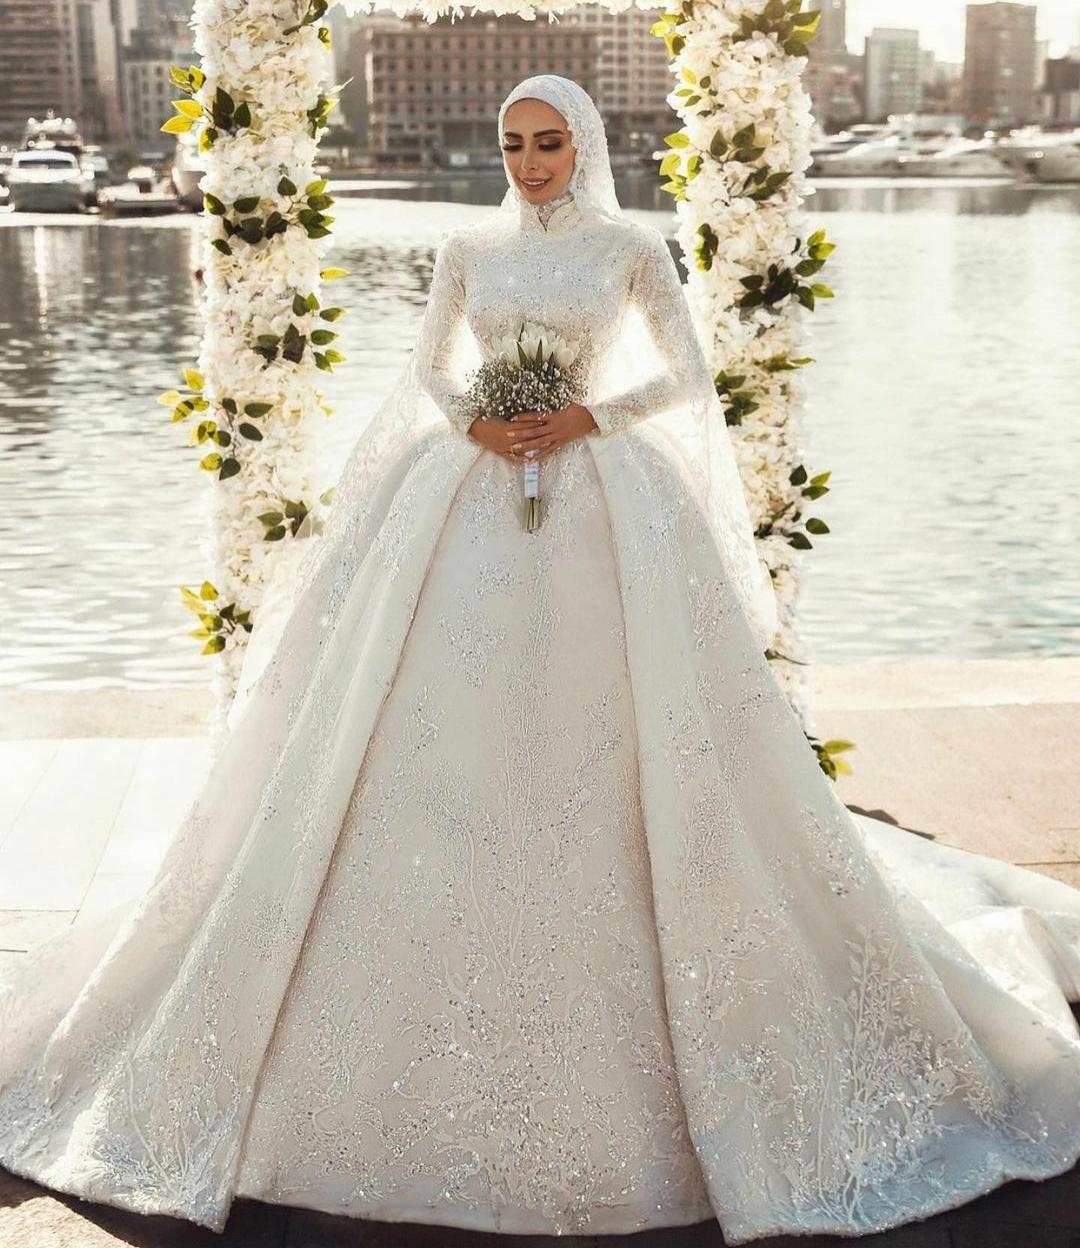 Modern Affinity — Muslim Bride Series: The Dress